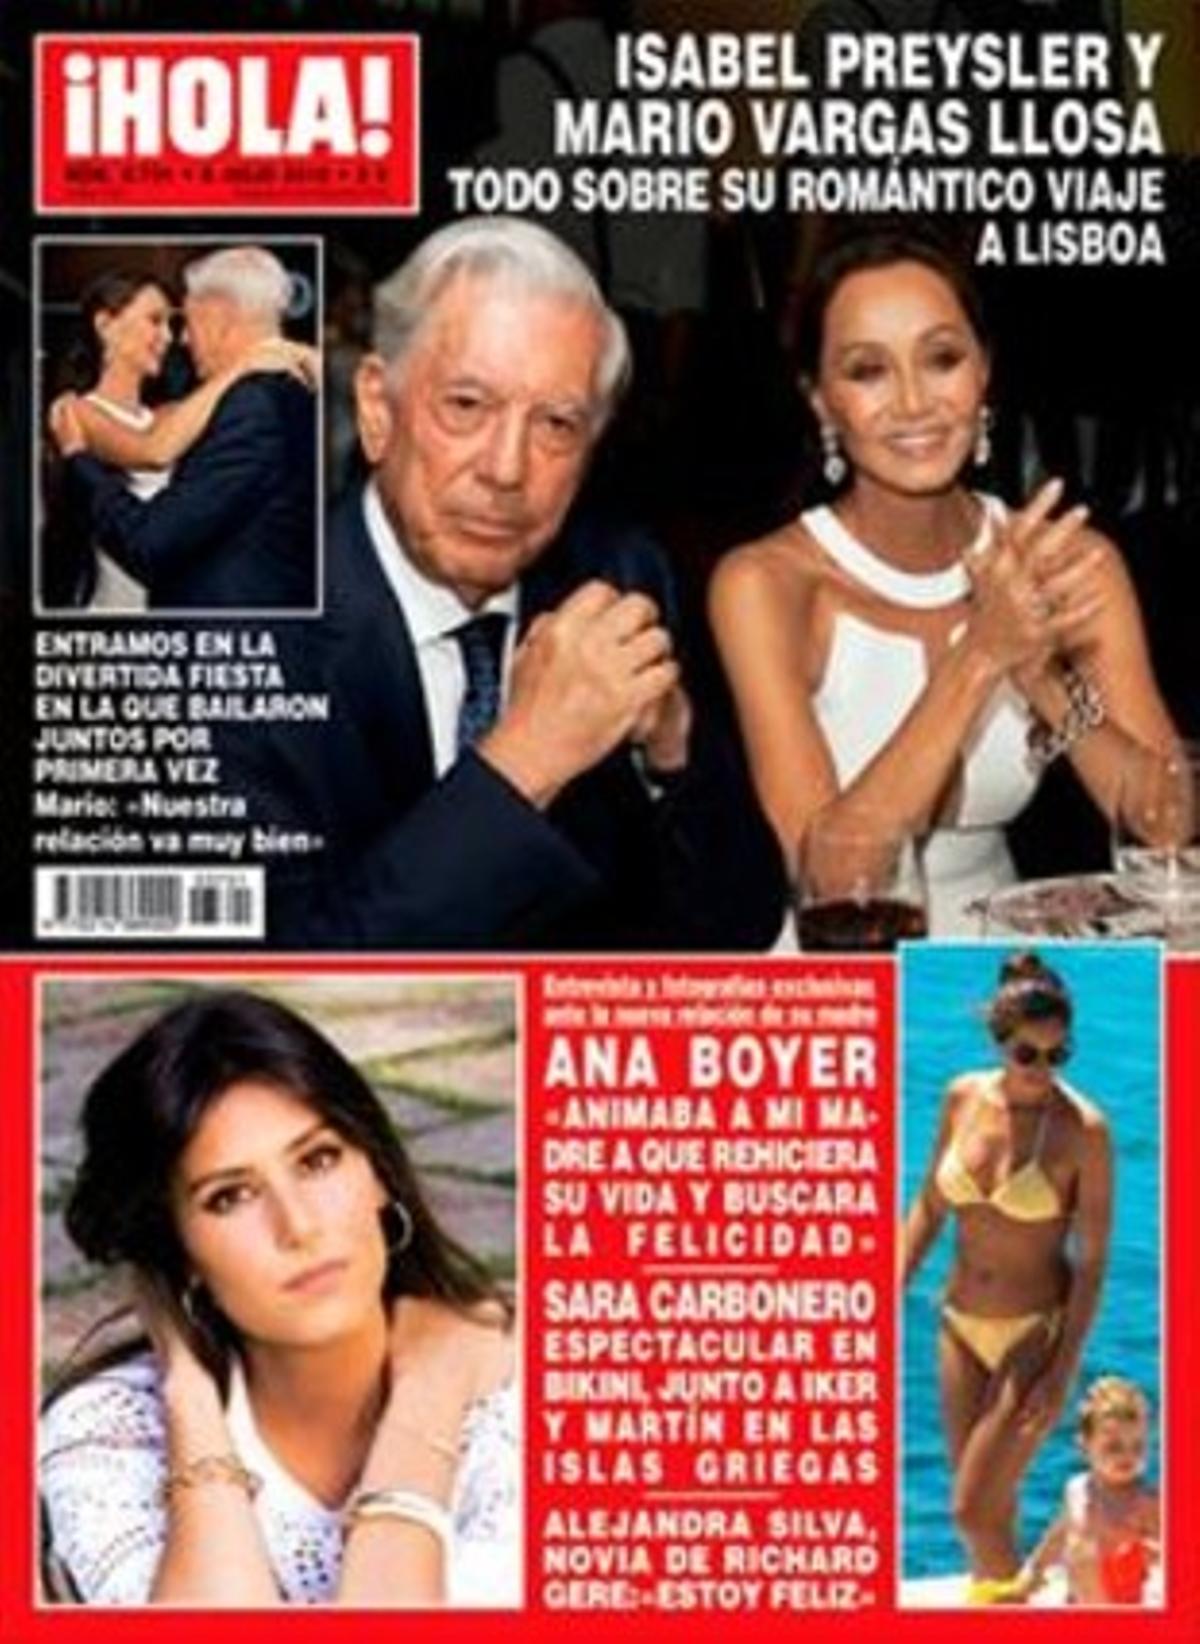 Vargas Llosa  i Preysler ja es besen en públic_MEDIA_1